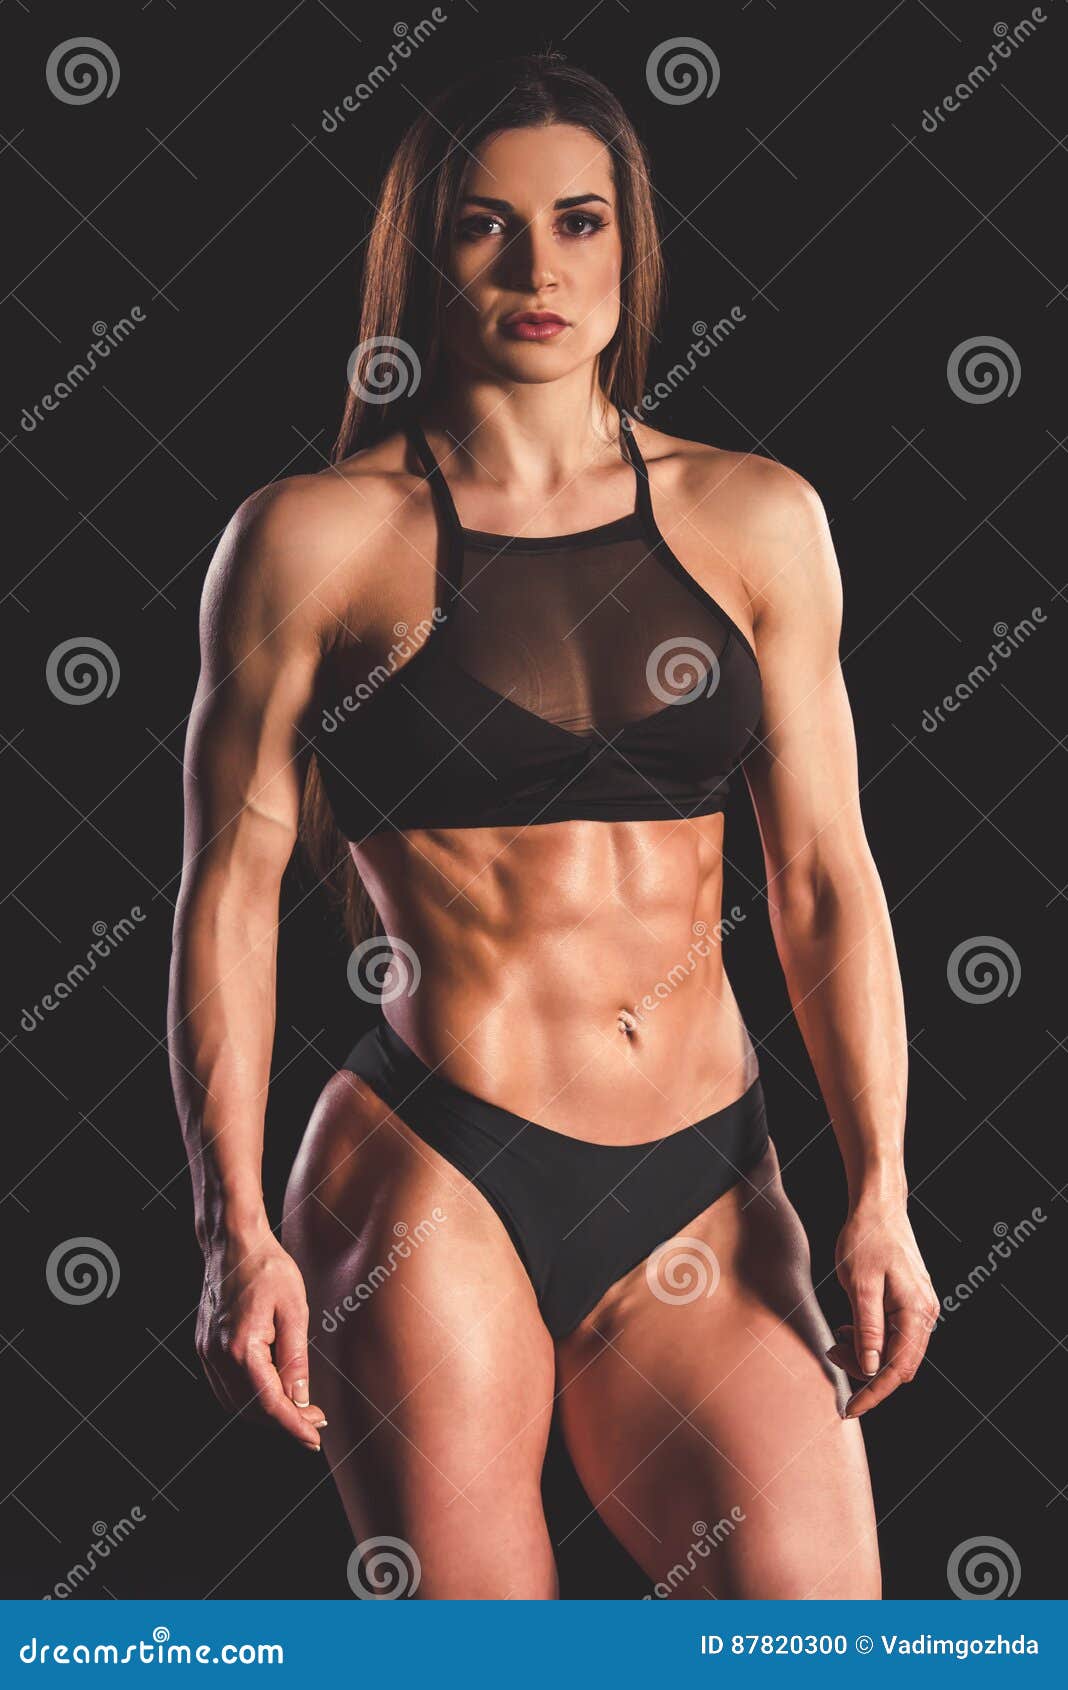 https://thumbs.dreamstime.com/z/beautiful-strong-woman-muscular-black-underwear-dark-background-87820300.jpg